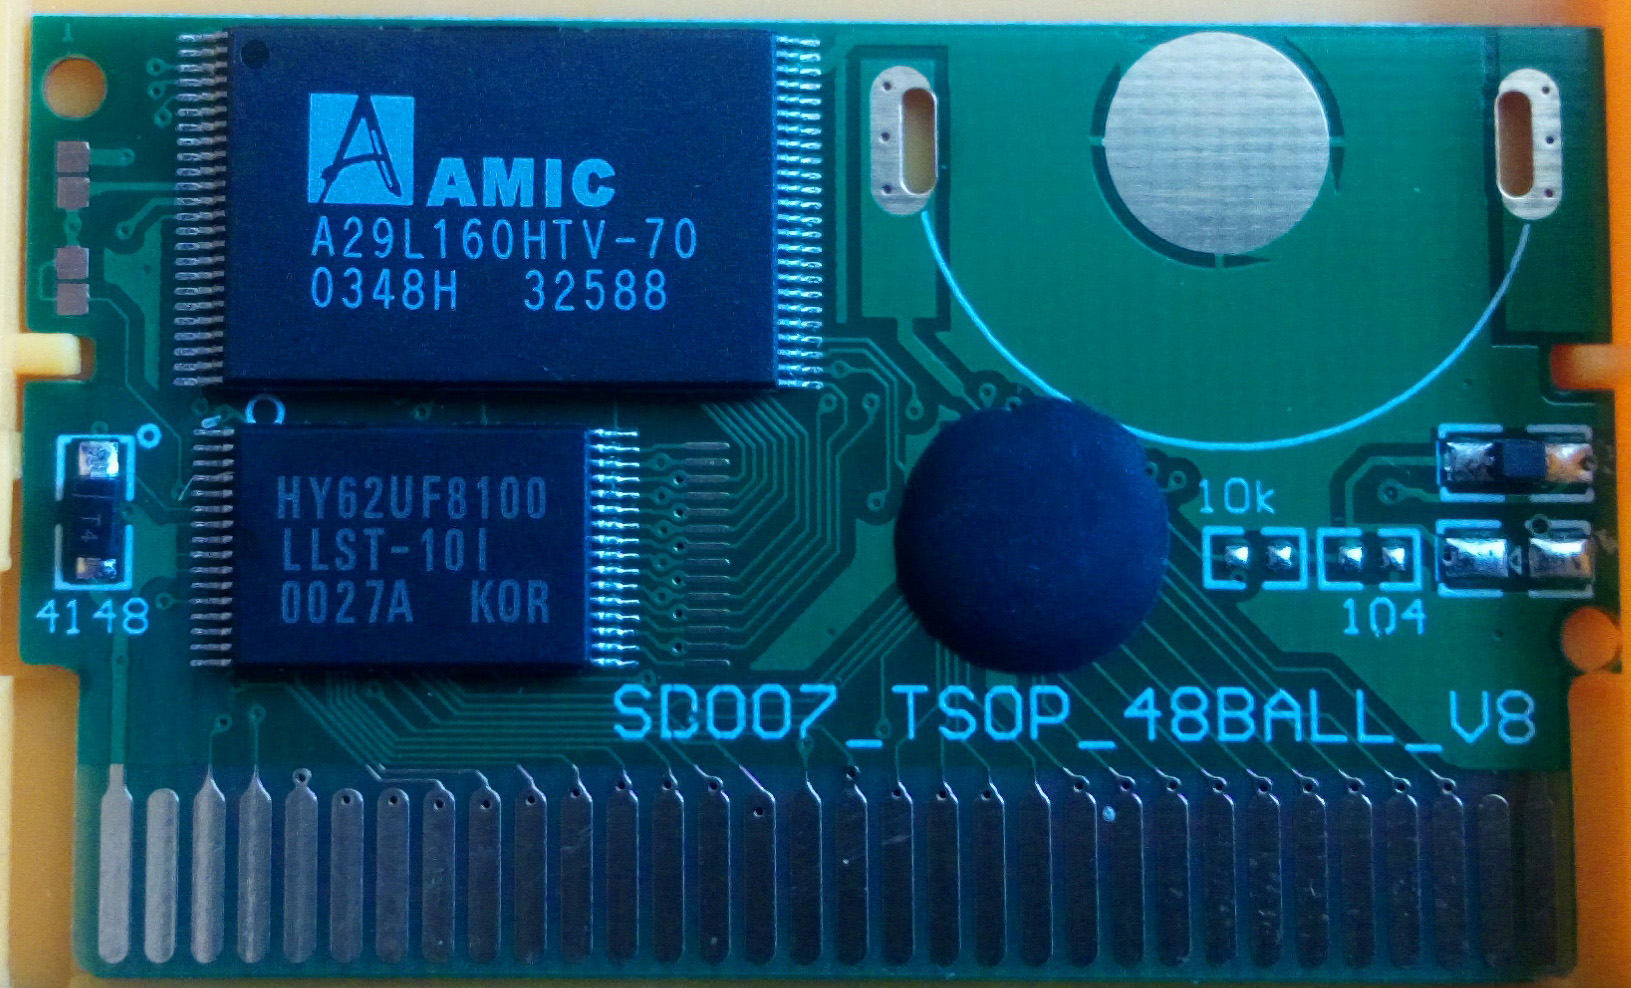 SD007 TSOP 48BALL V8.jpg